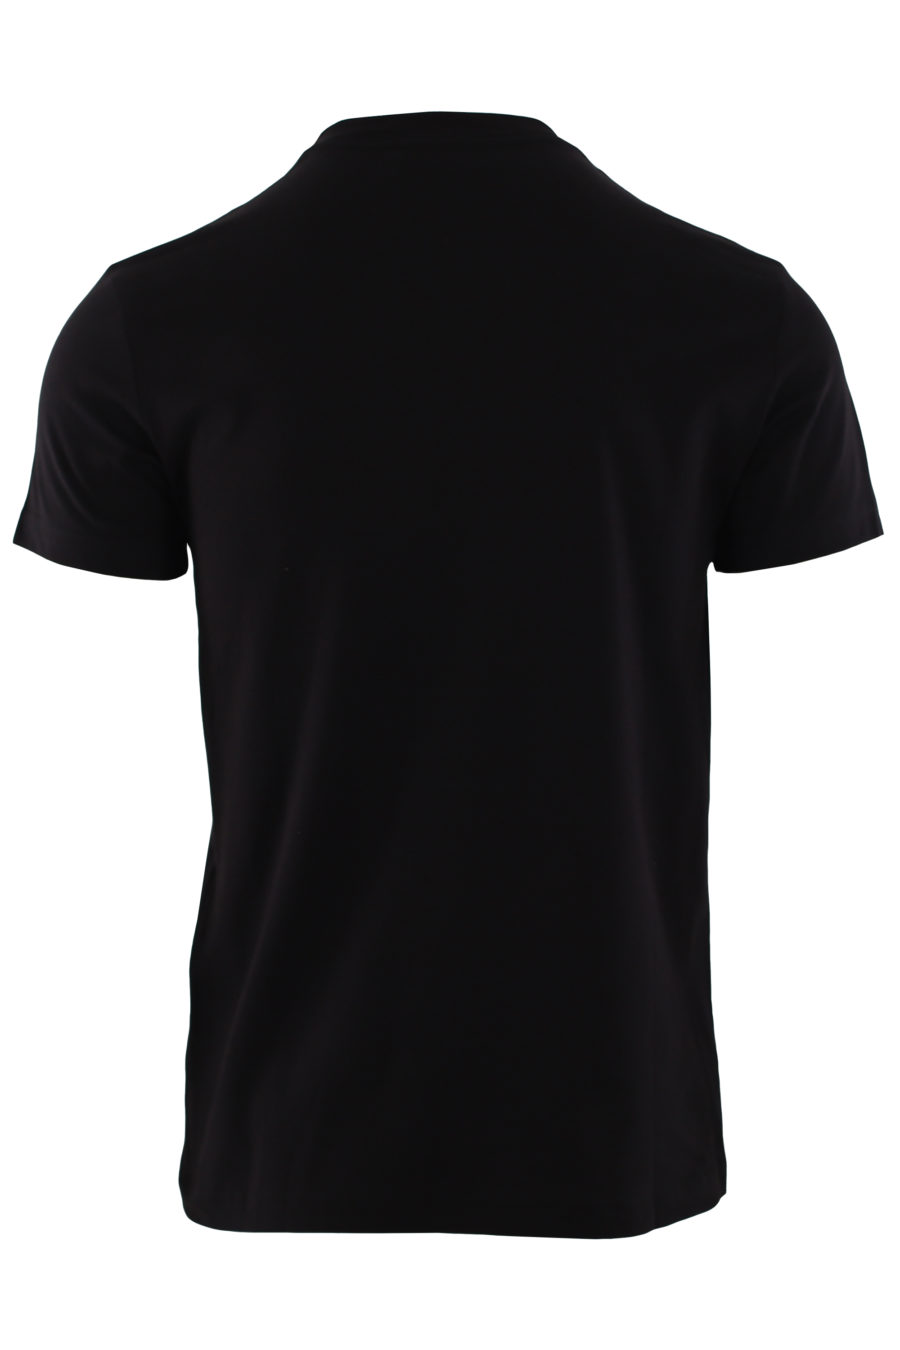 T-shirt noir avec logo rond doré - IMG 0380